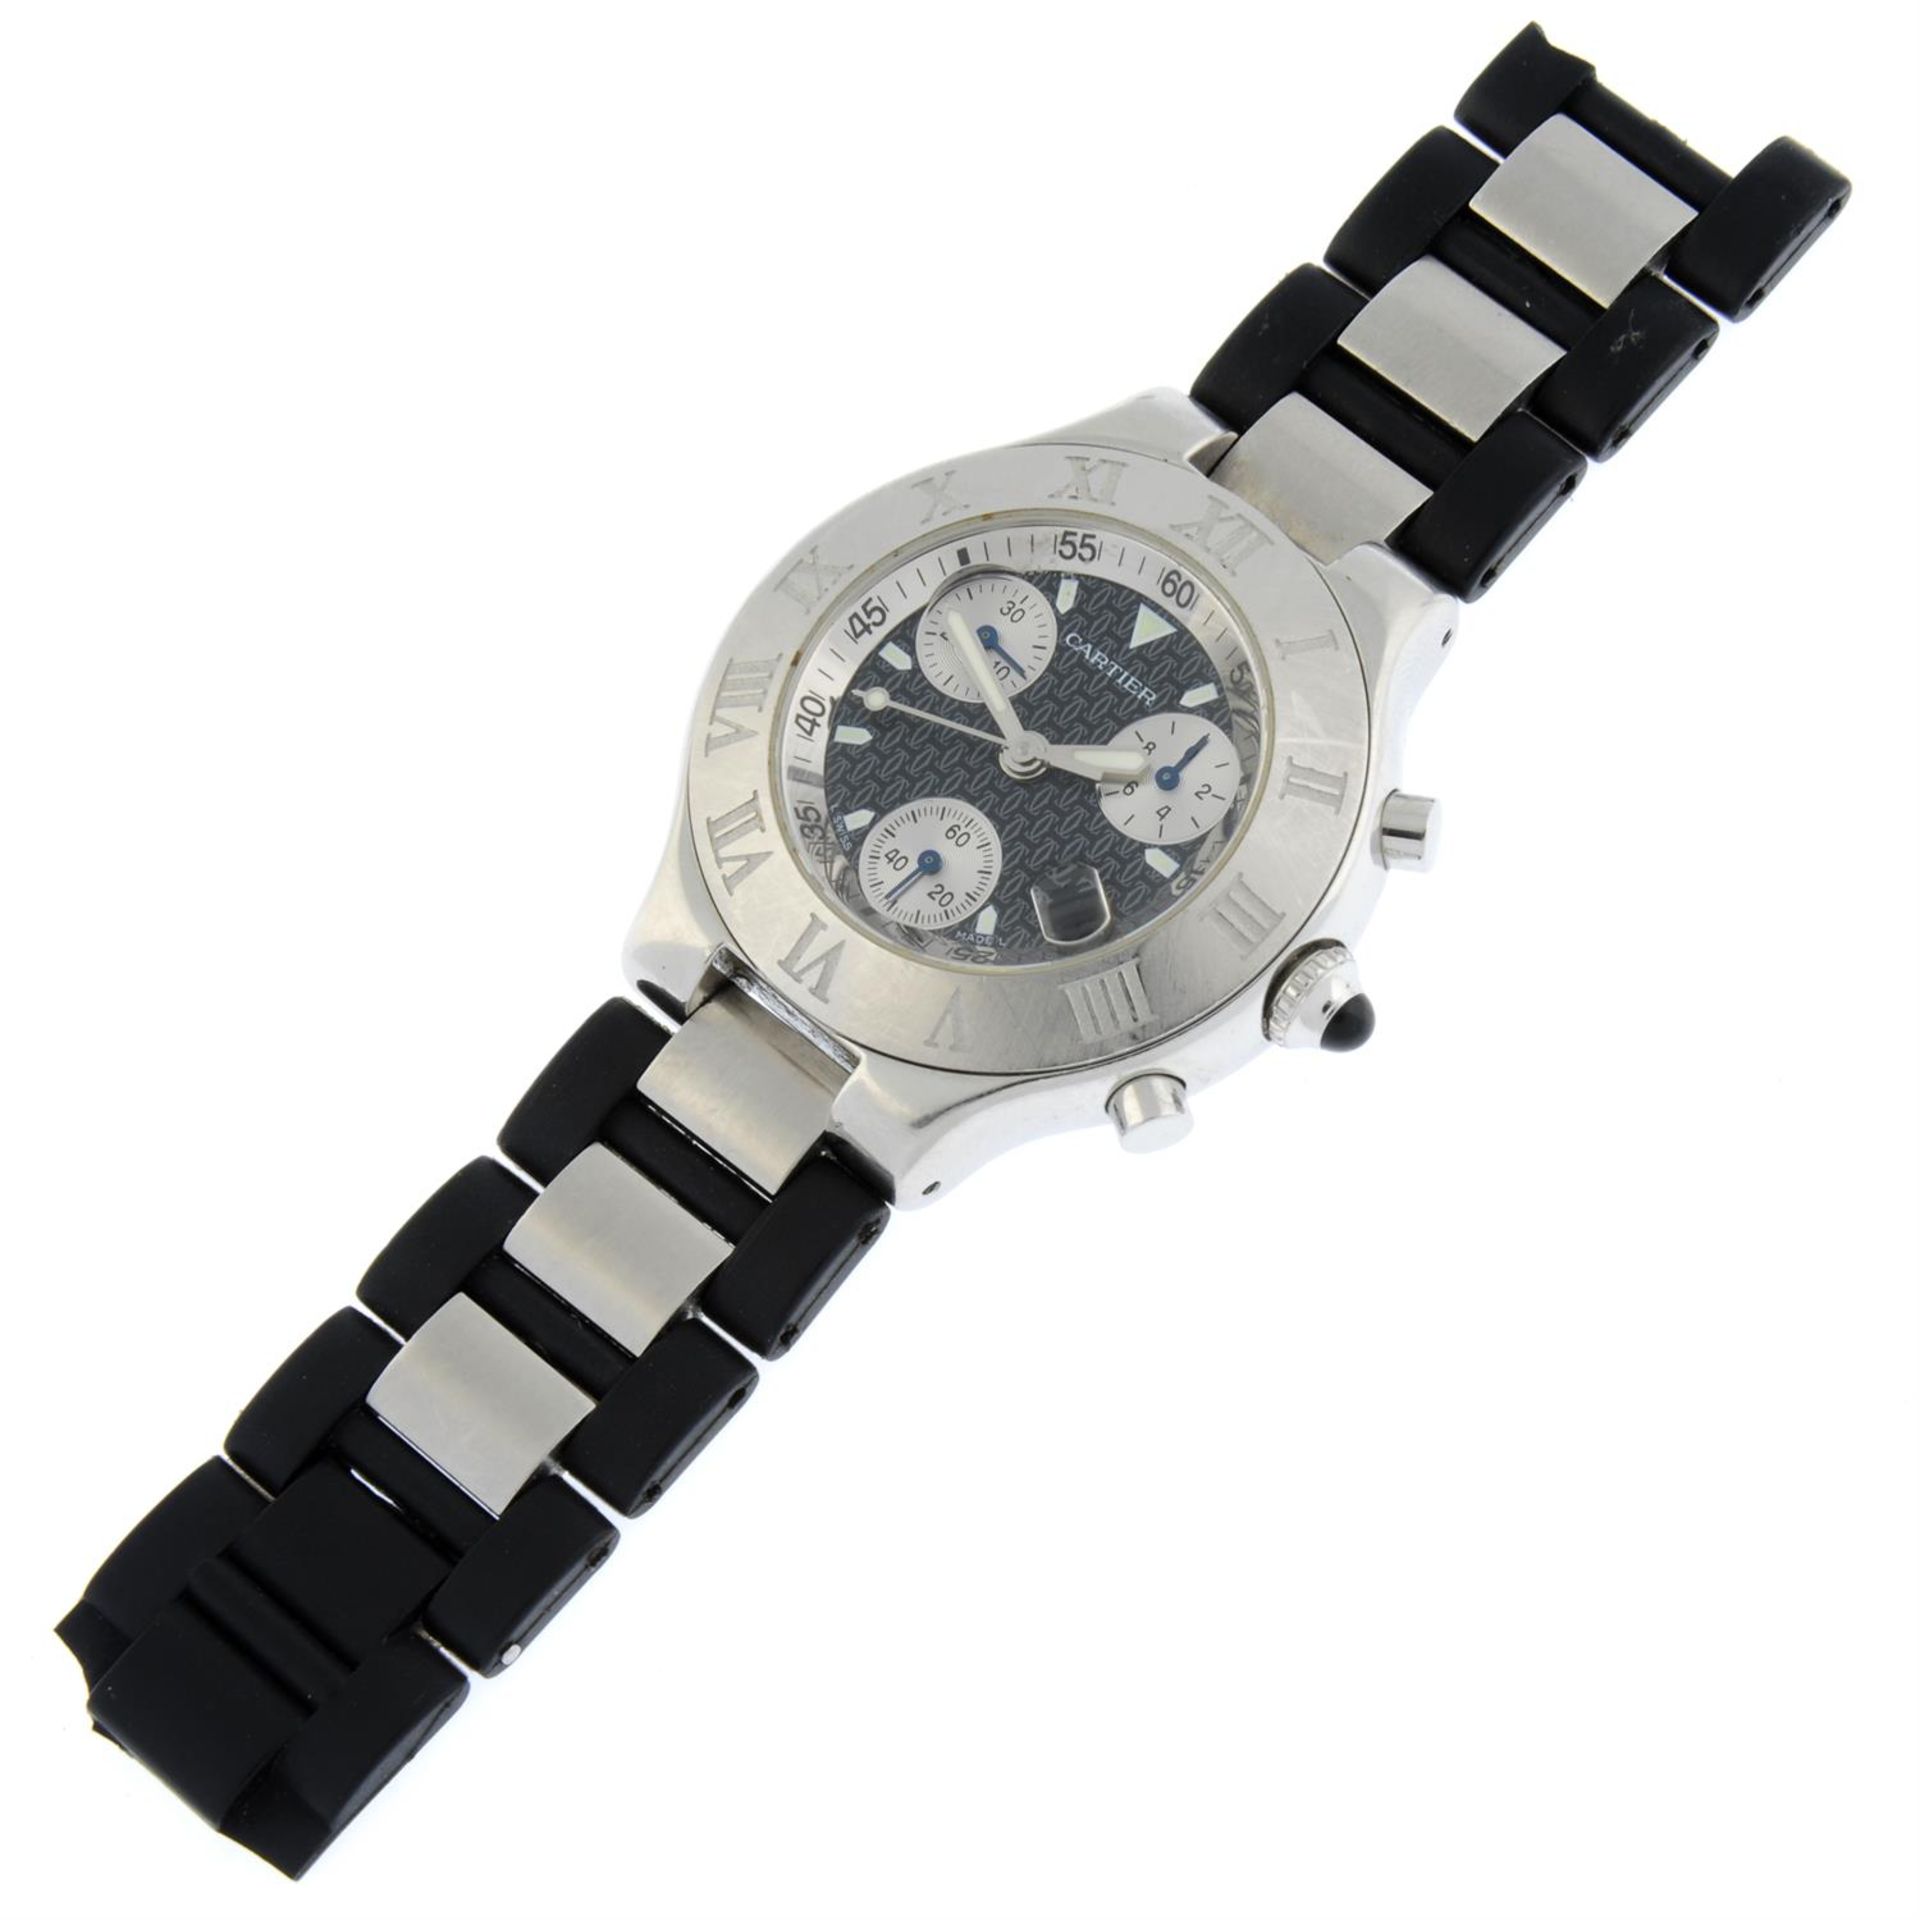 CARTIER - a bi-material Chronoscaph 21 chronograph bracelet watch, 38mm. - Image 2 of 3